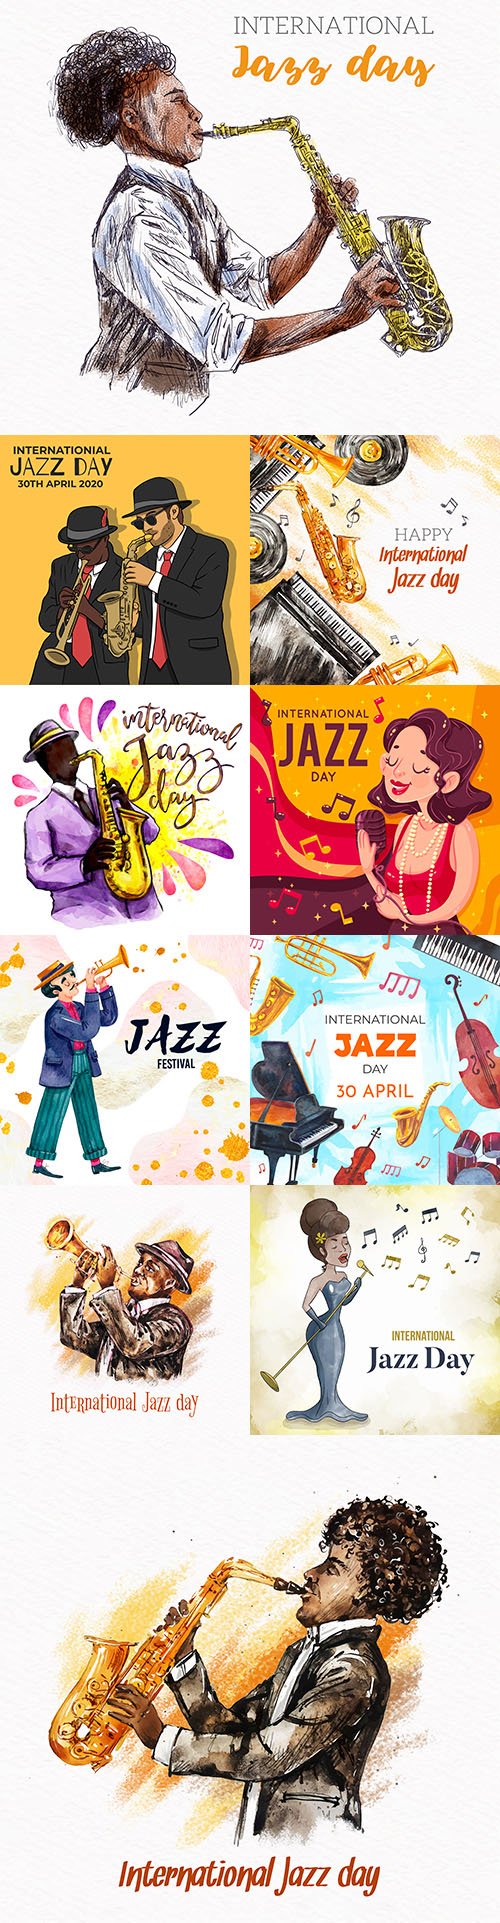 International Jazz Day illustrated watercolor design